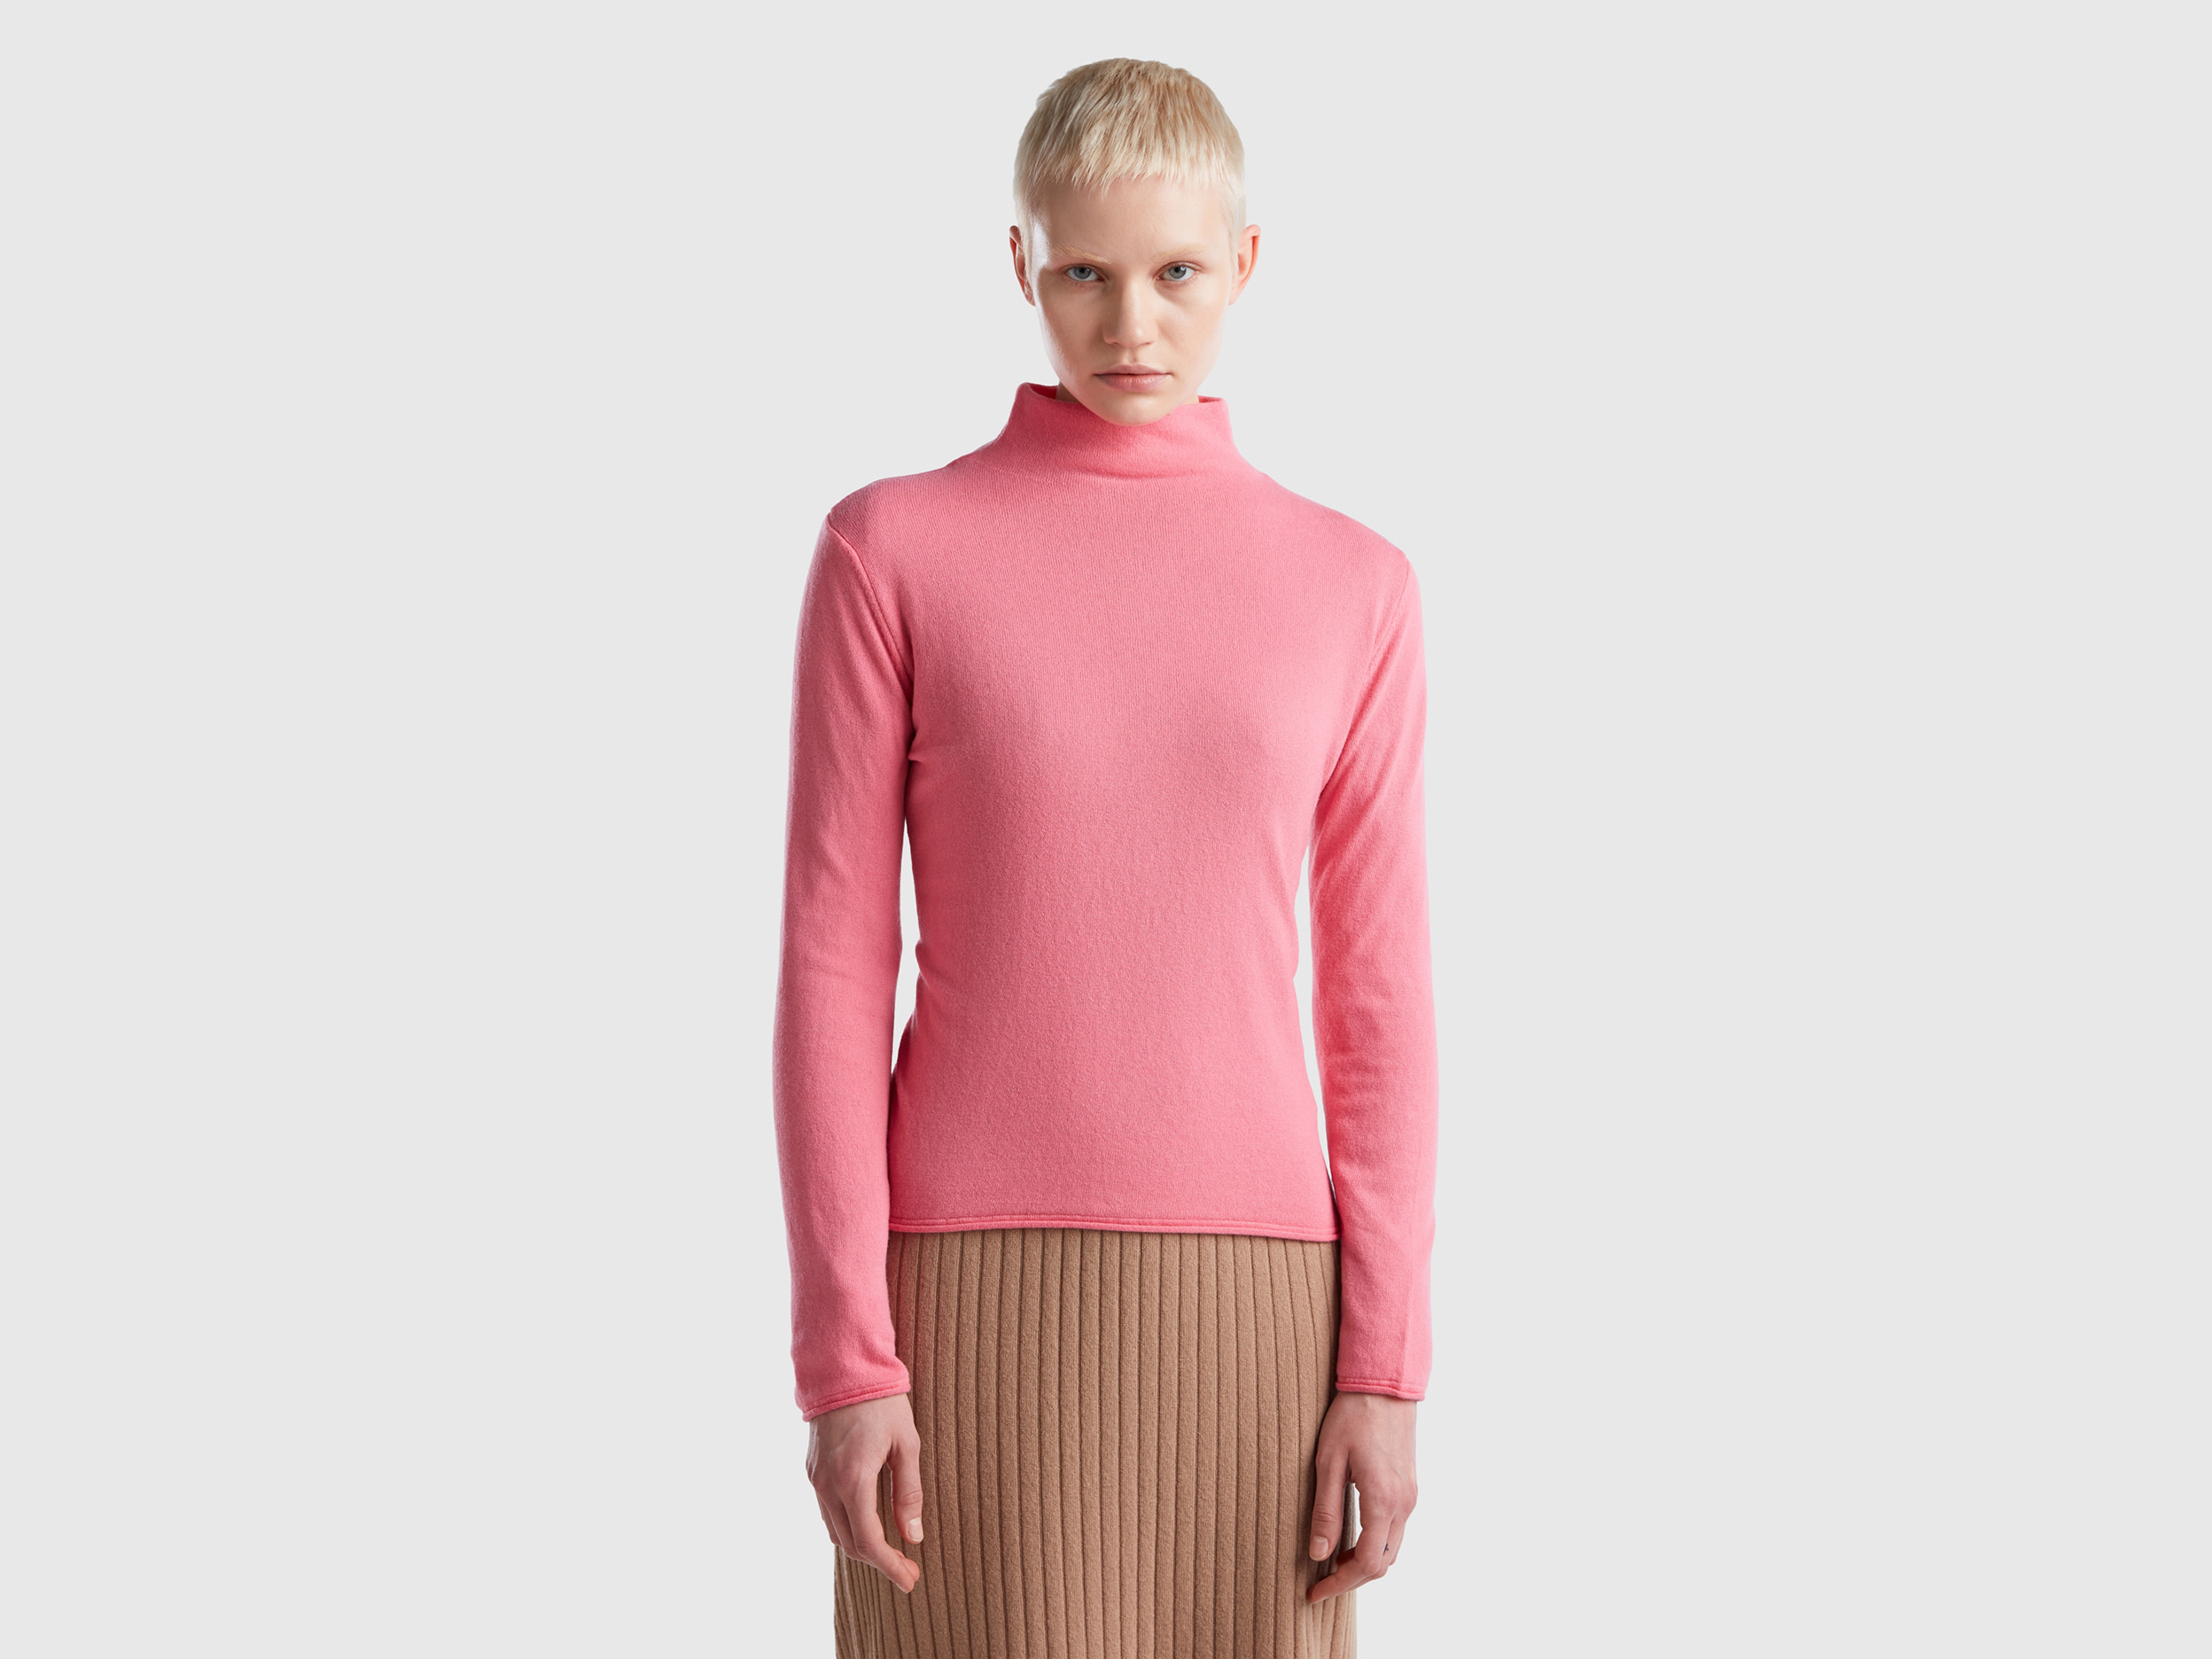 Benetton, Cashmere Blend Sweater, size L, Pink, Women